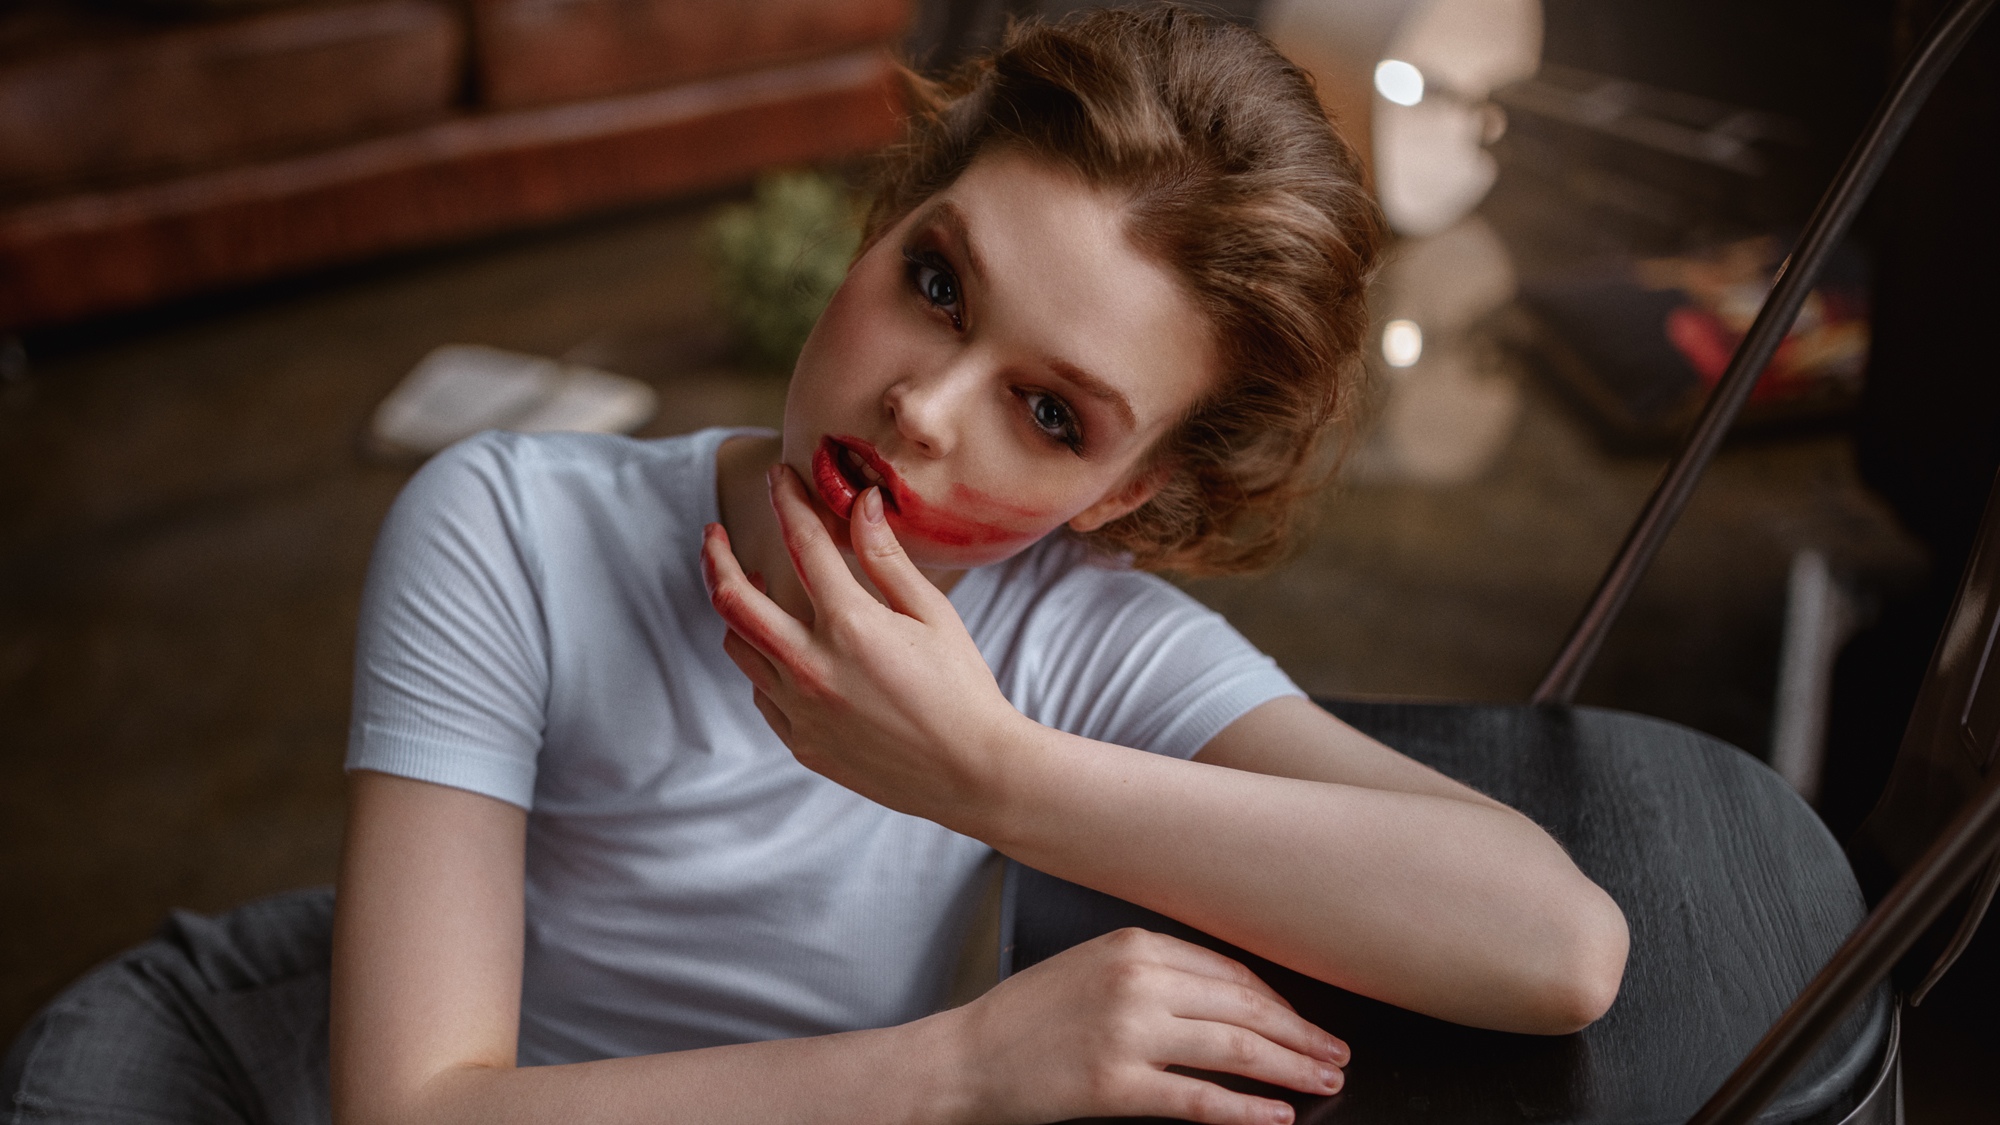 Olya Pushkina Women Model Brunette Looking At Viewer Portrait Lipstick Red Lipstick Finger On Lips T 2000x1125